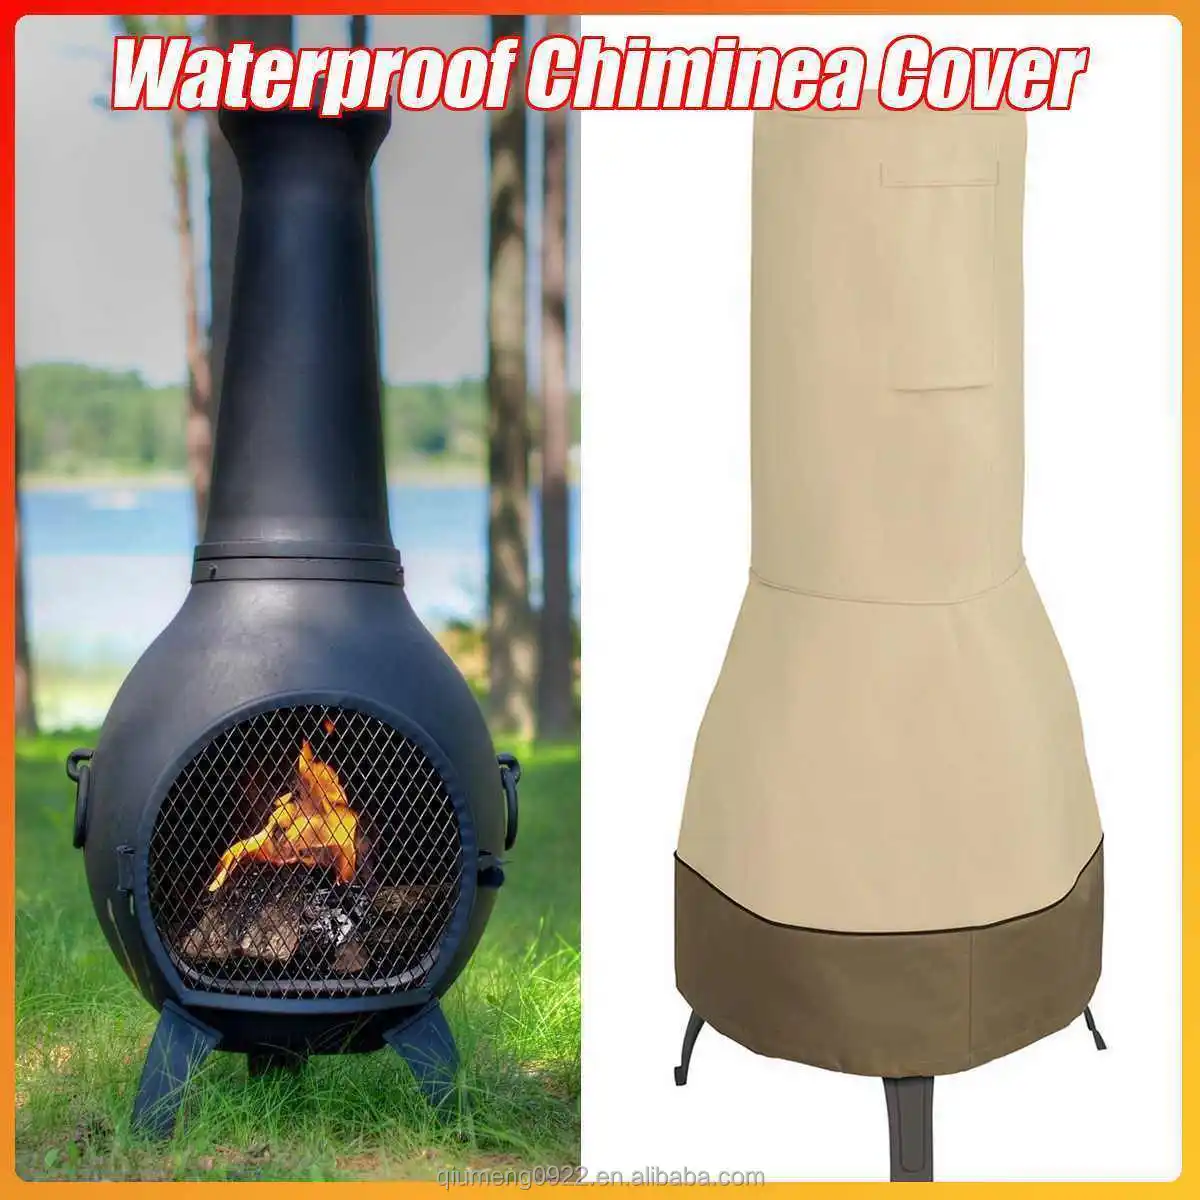 Details about   Outdoor Garden Backyard Rainproof Chiminea Stove Cover Dustproof Heater Cover 